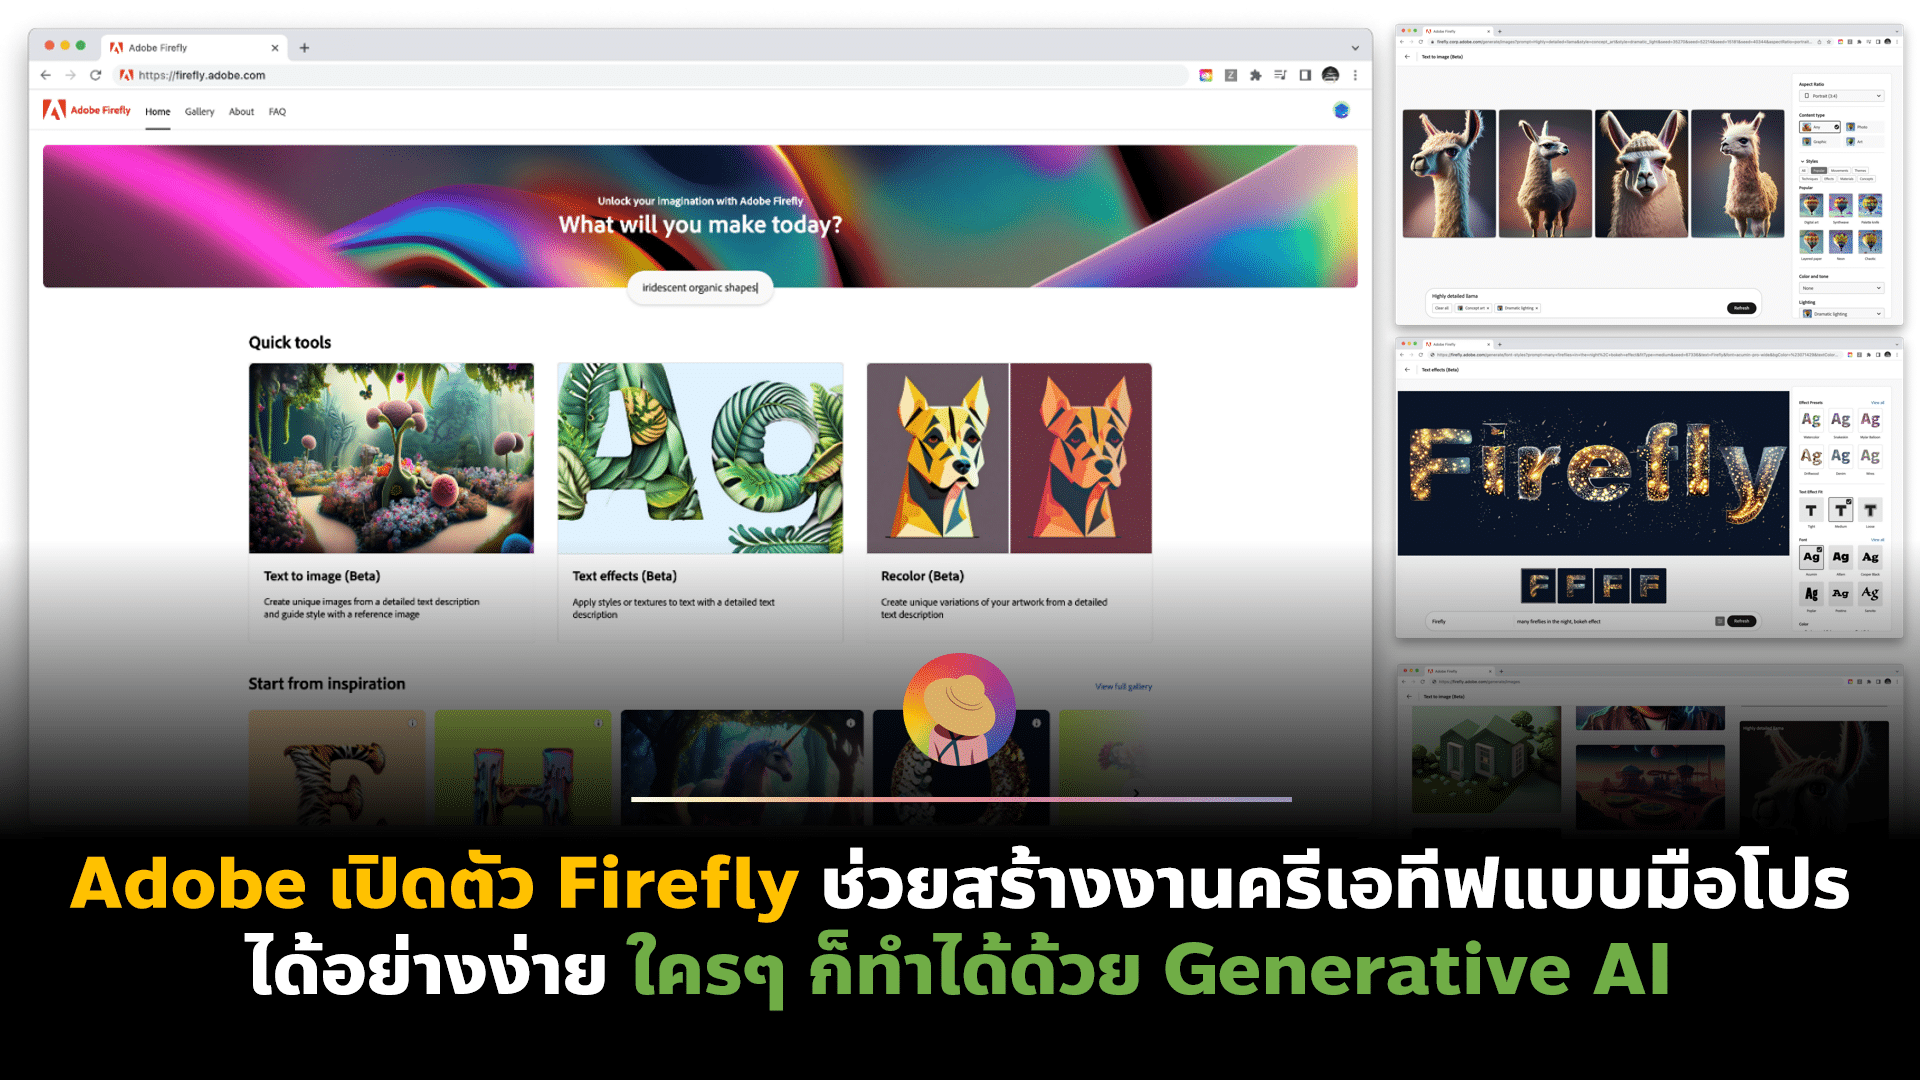 Adobe เปิดตัว Firefly ช่วยสร้างงานครีเอทีฟแบบมือโปรได้อย่างง่าย ใครๆ ก็ทำได้ด้วย Generative AI